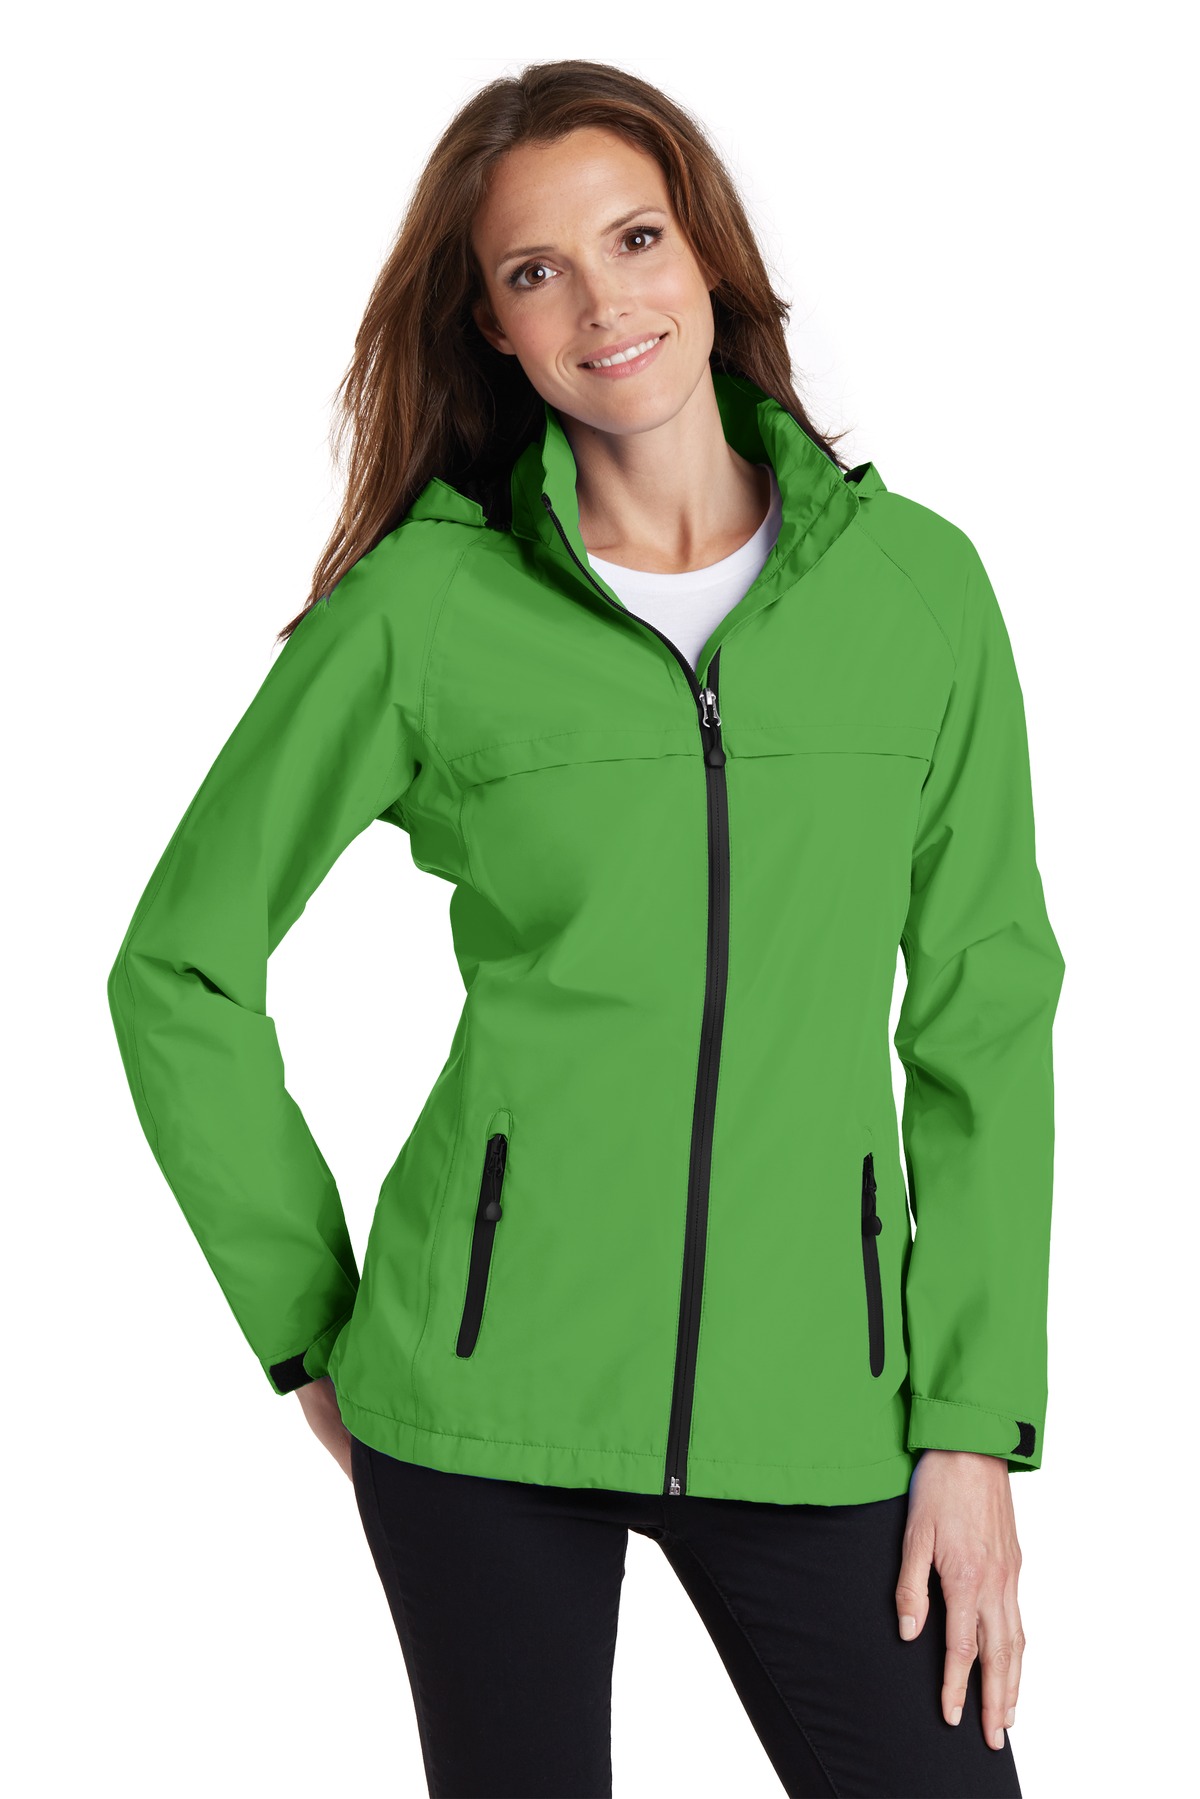 Port Authority Ladies Torrent Waterproof Jacket-L (Vine Green) - image 1 of 6